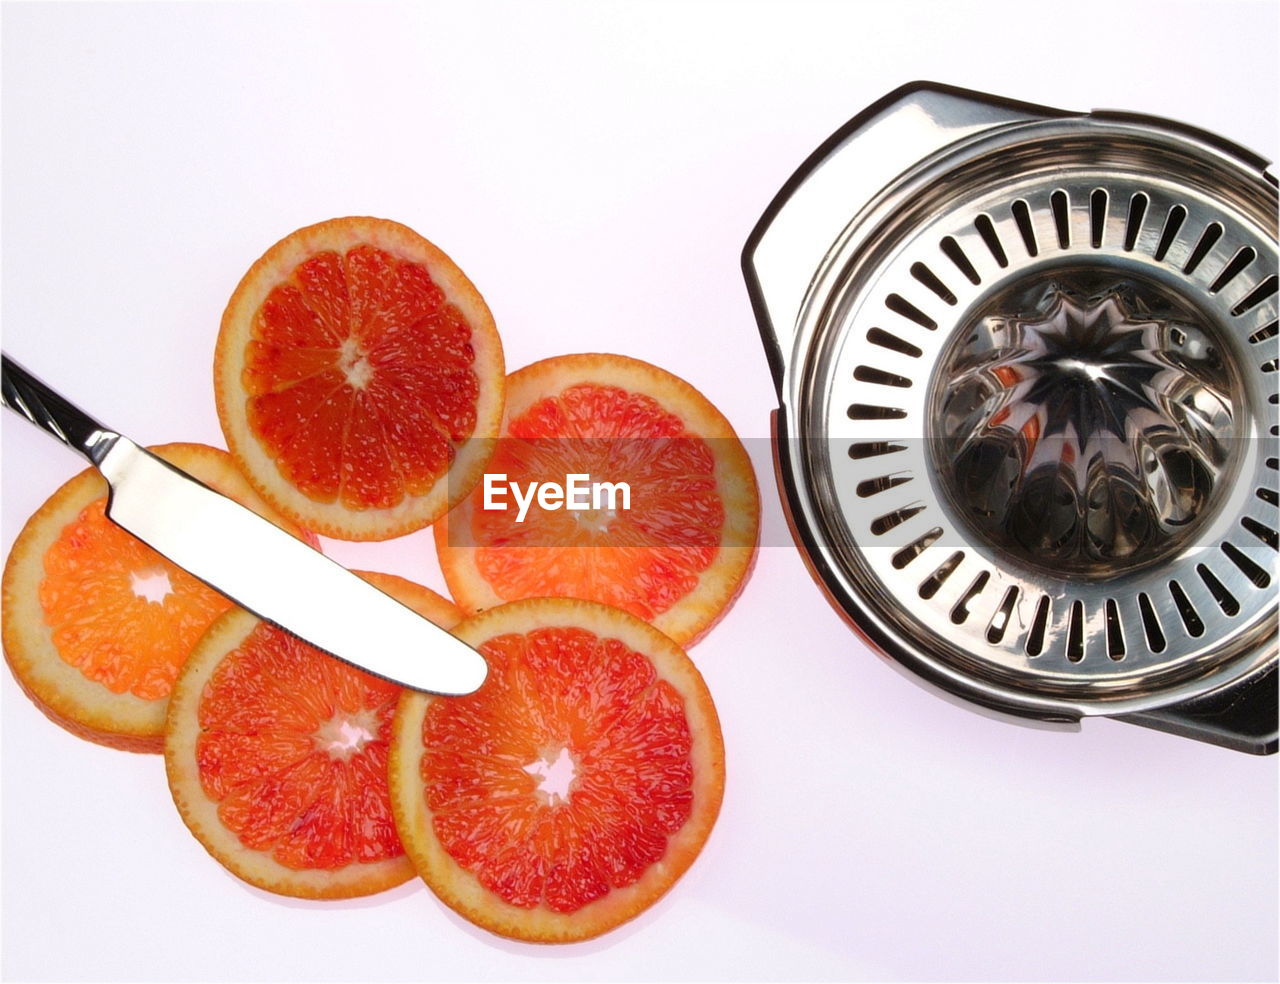 Ingredients Knife Cut Food And Drink Wite Orange Color Wite Color Juicer Citrus Fruit Squeezing Vitamin C Orange - Fruit Fruit Juice